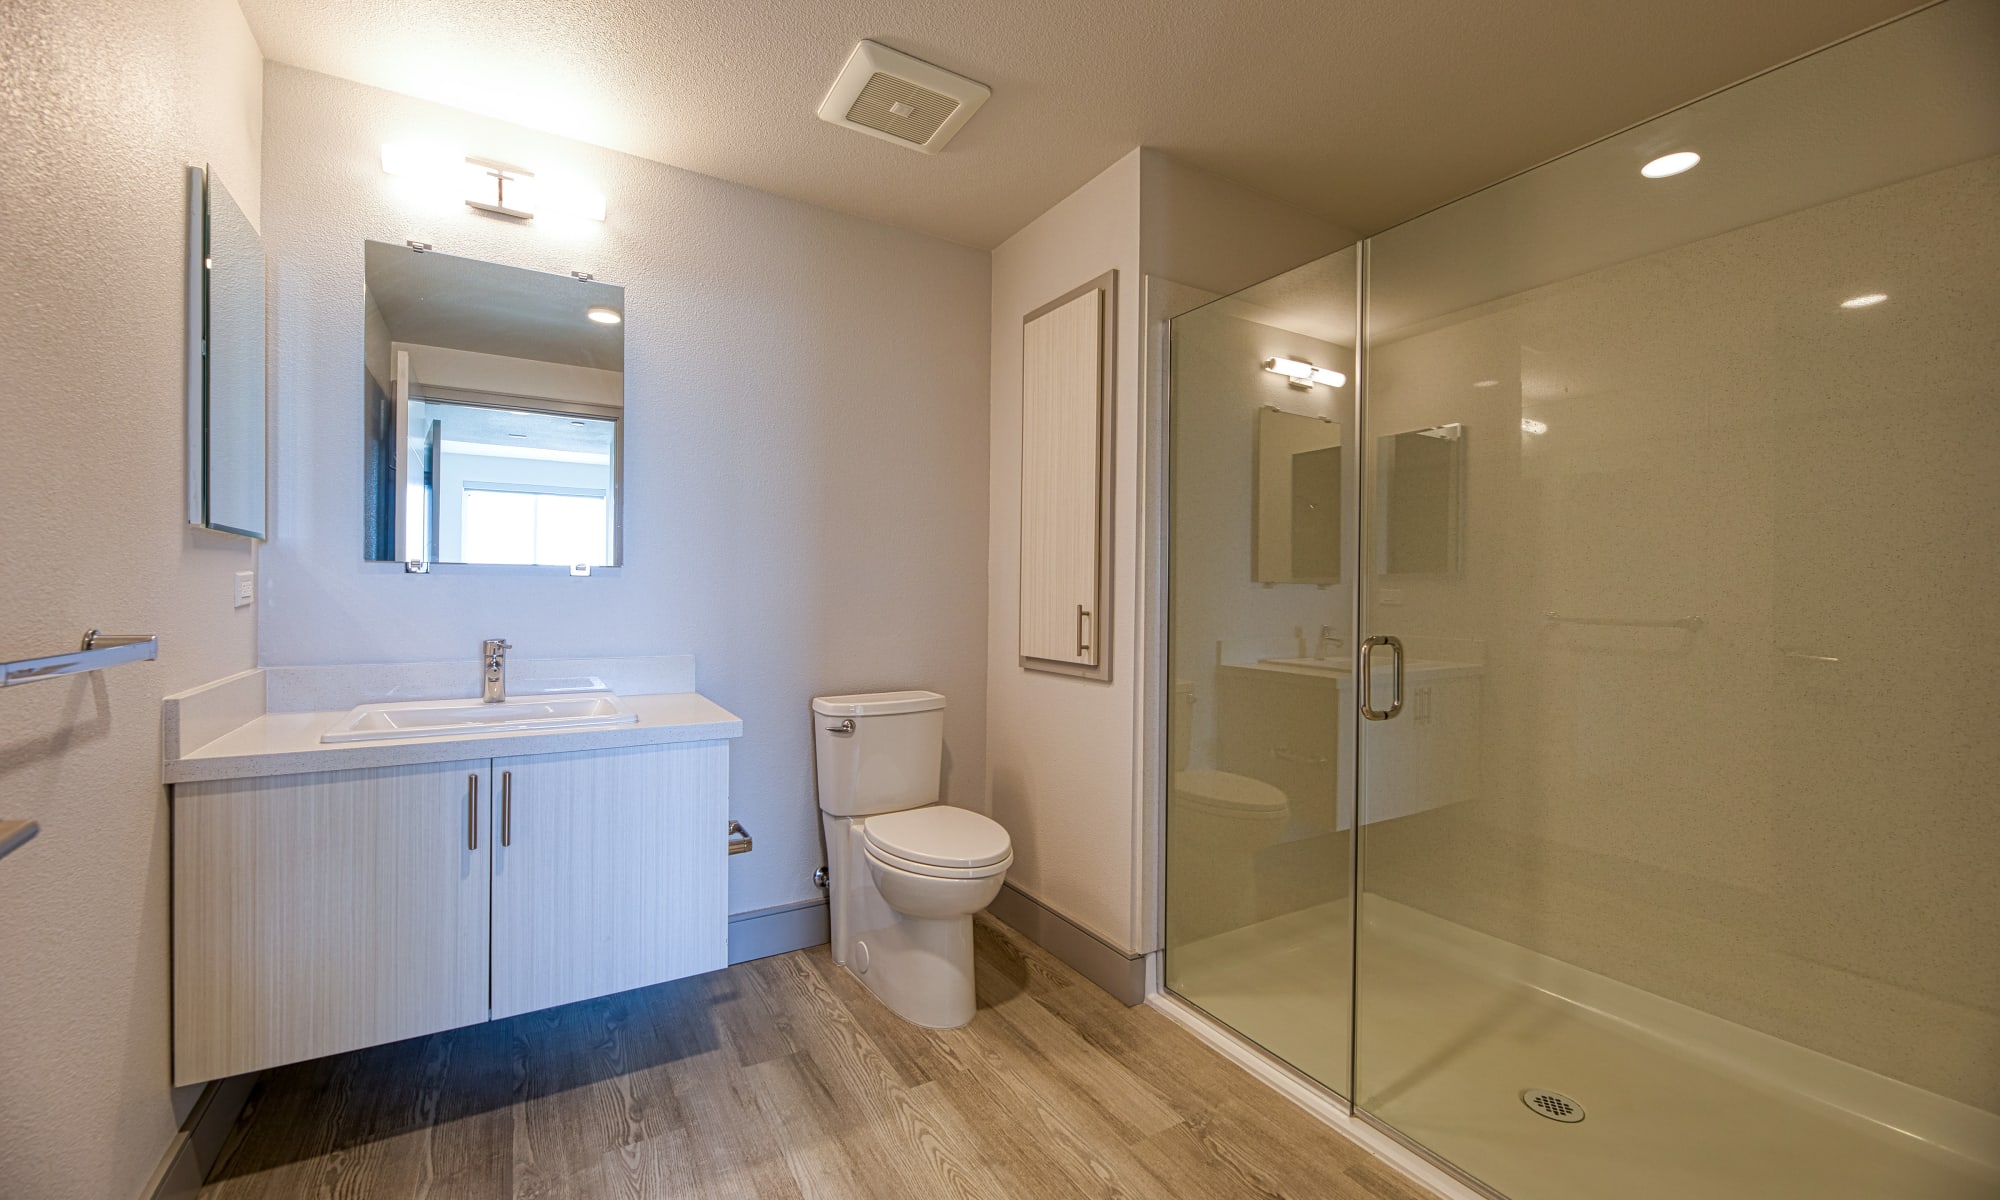 Bathroom featuring glass doored shower at Vespaio in San Jose, California